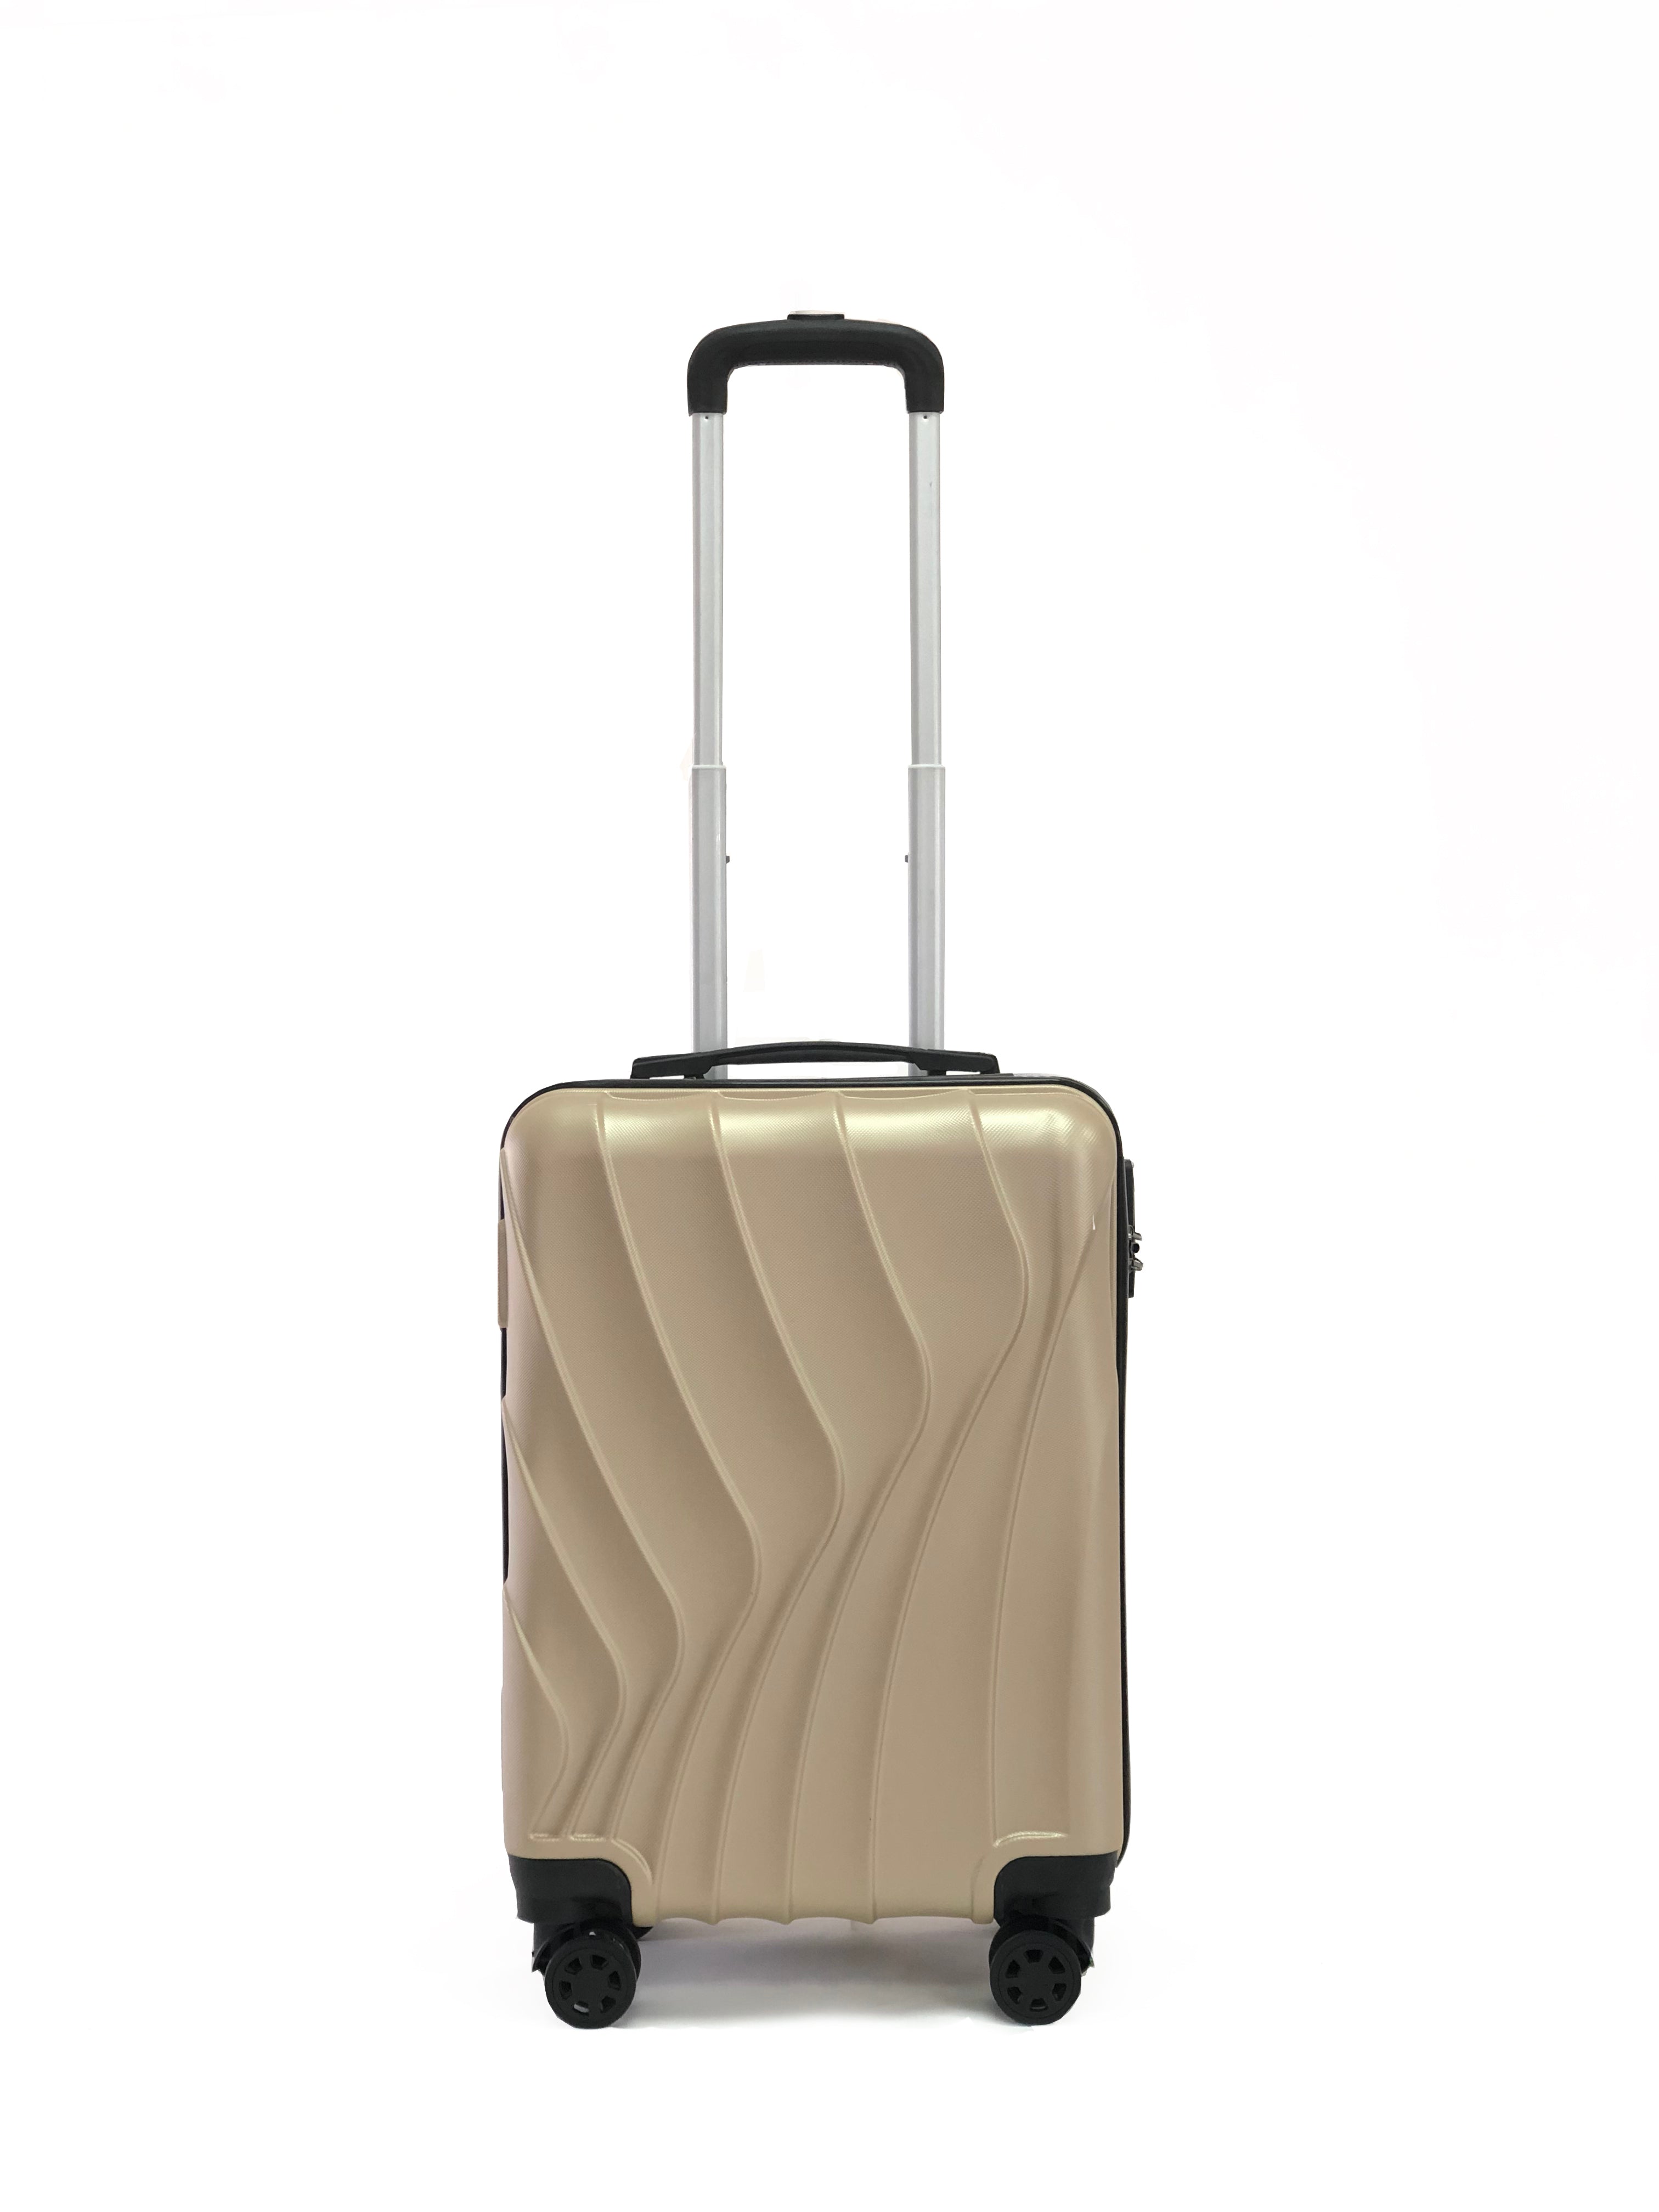 Vali Lv Horizon Suitcase, Túi Xách Lv